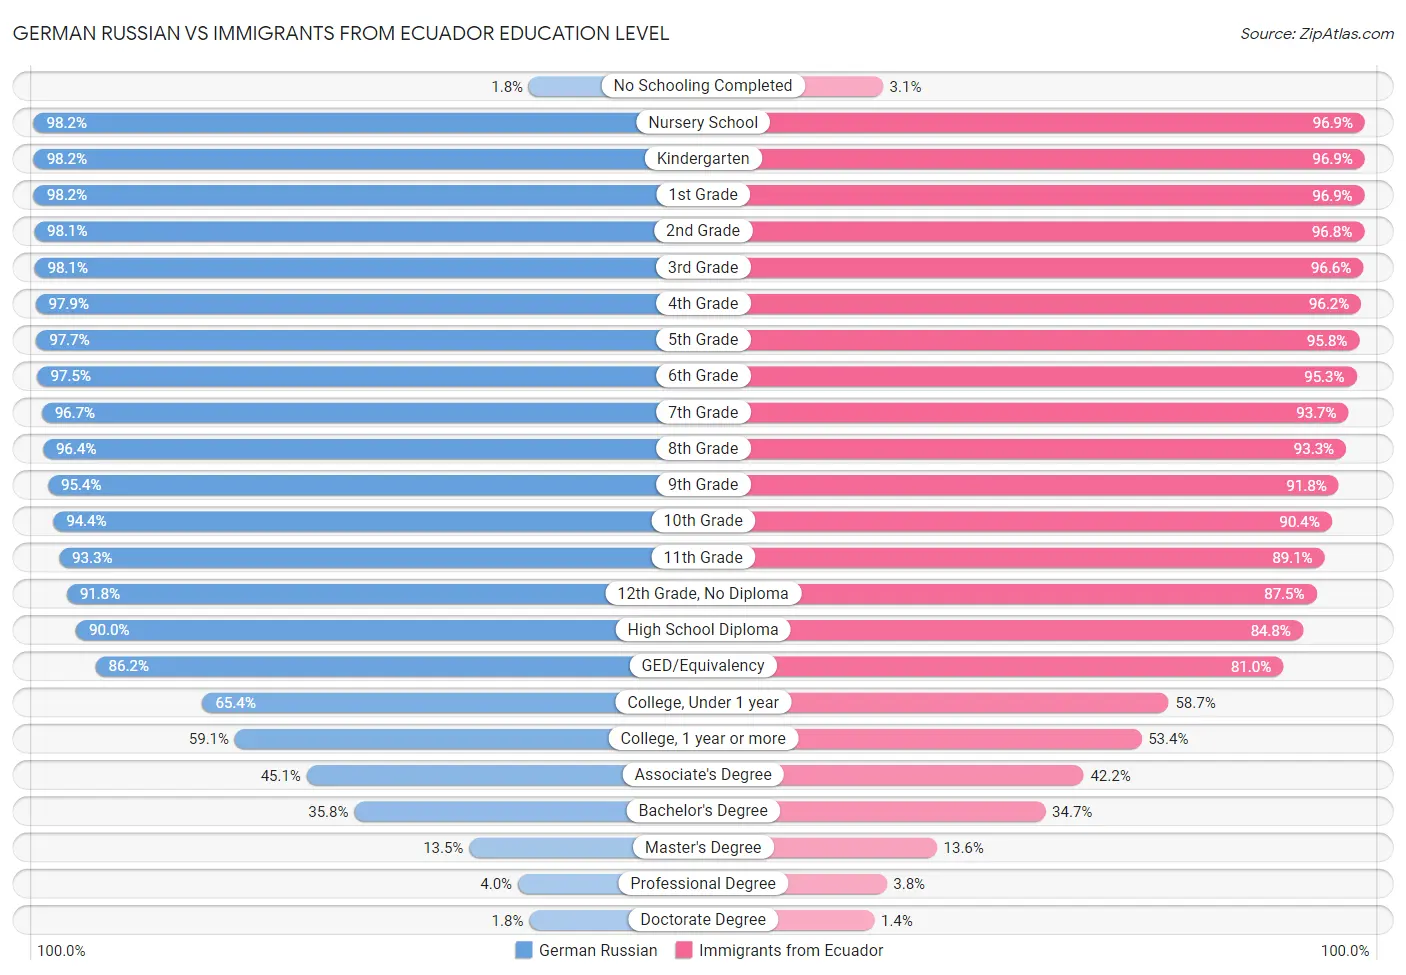 German Russian vs Immigrants from Ecuador Education Level